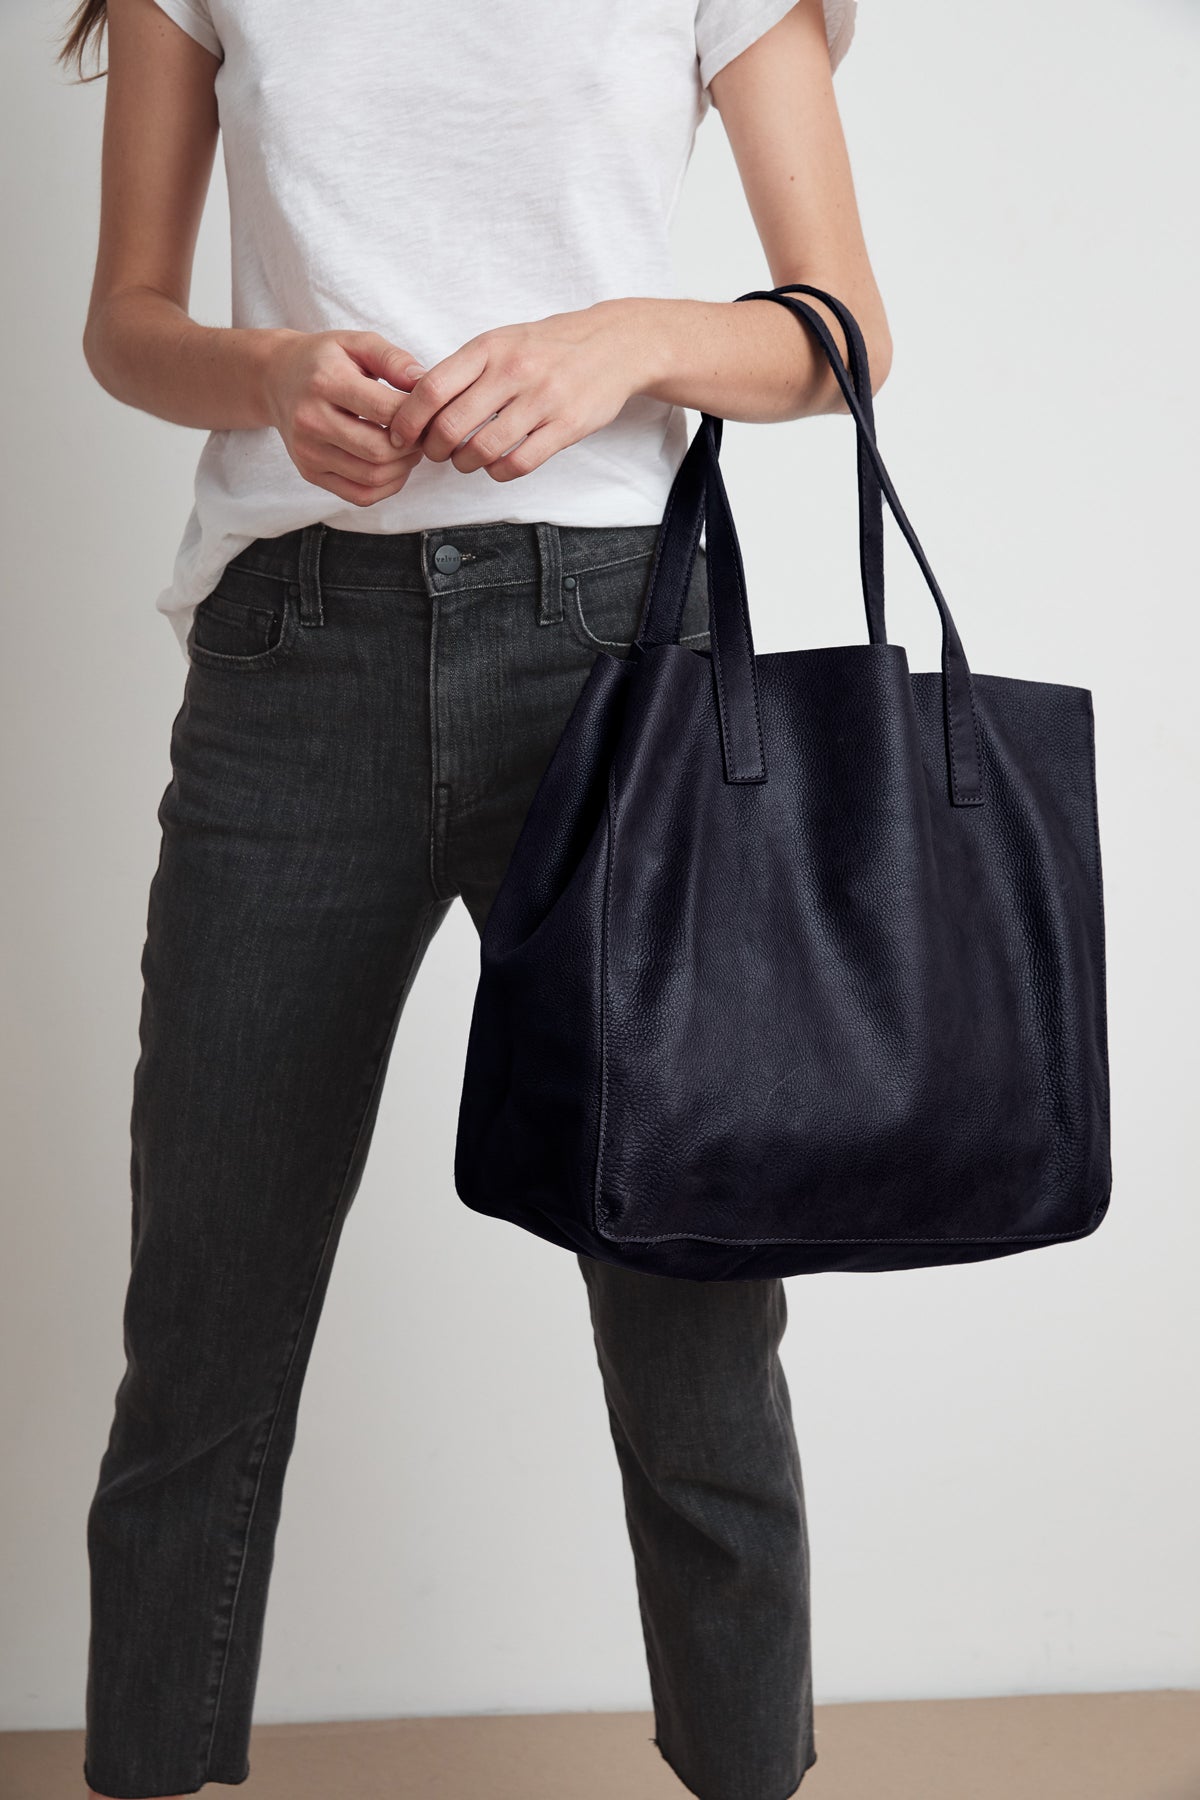 ZARA Bucket Bag STRAP Handle WOMAN STUDIO Tote LEATHER HandBag NWT 8026/104  | eBay